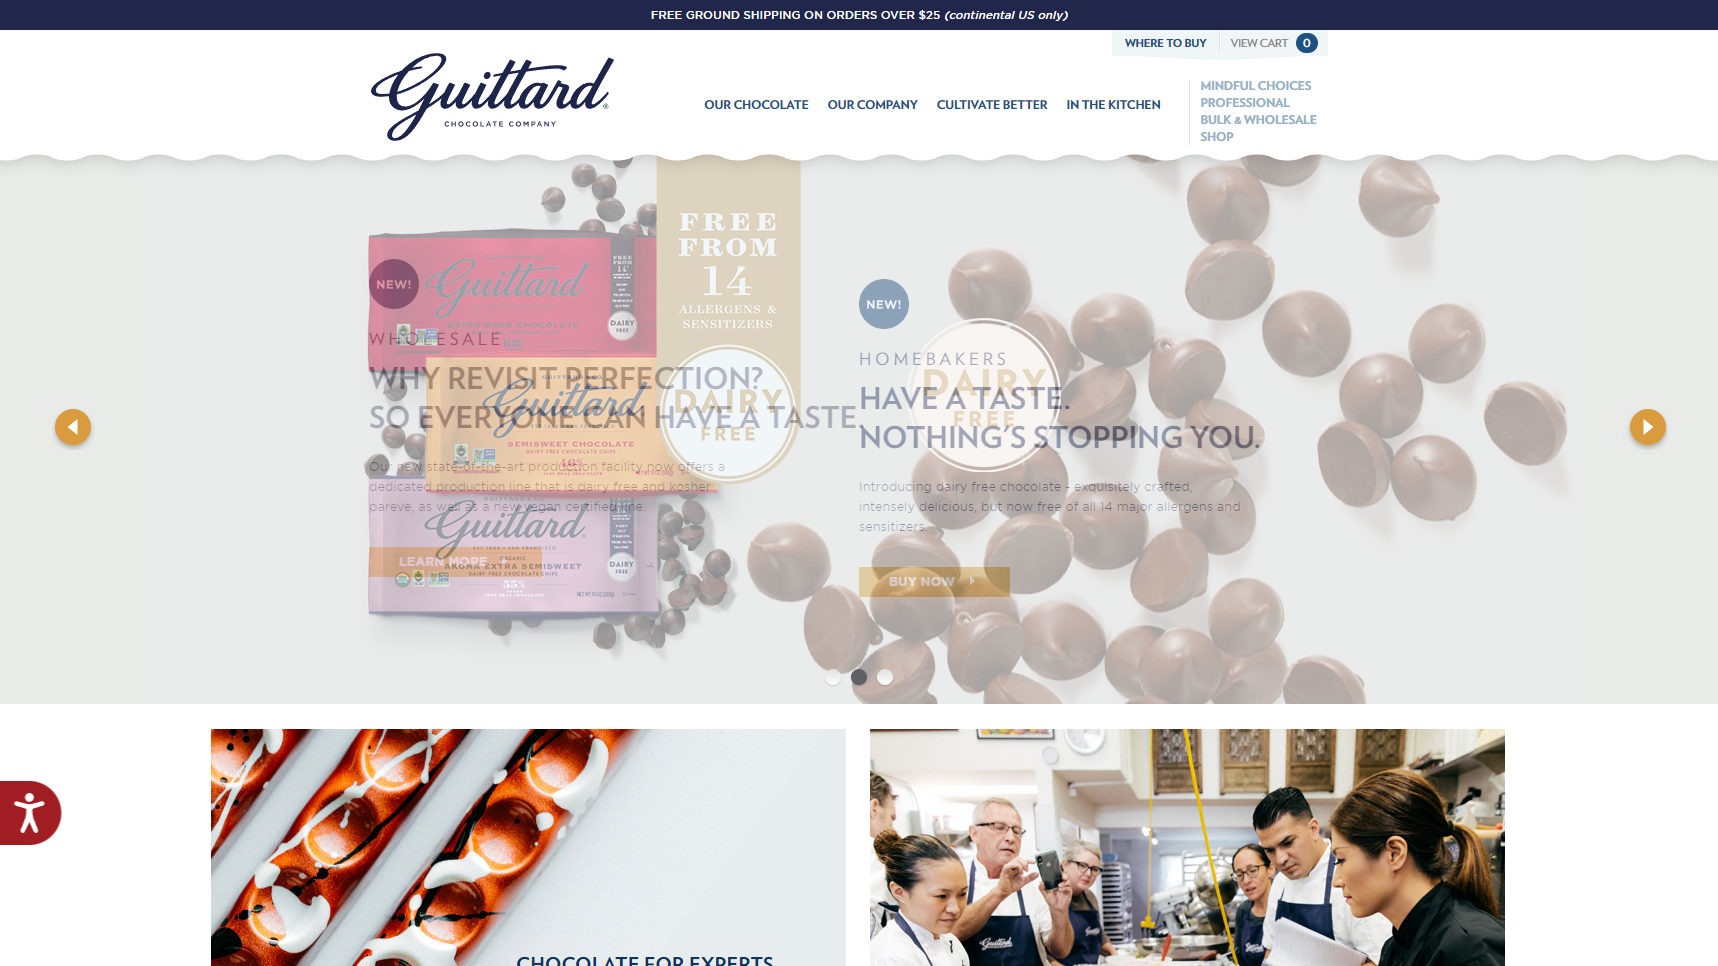 Guittard Chocolate Company - Chocolate Bar Manufacturer